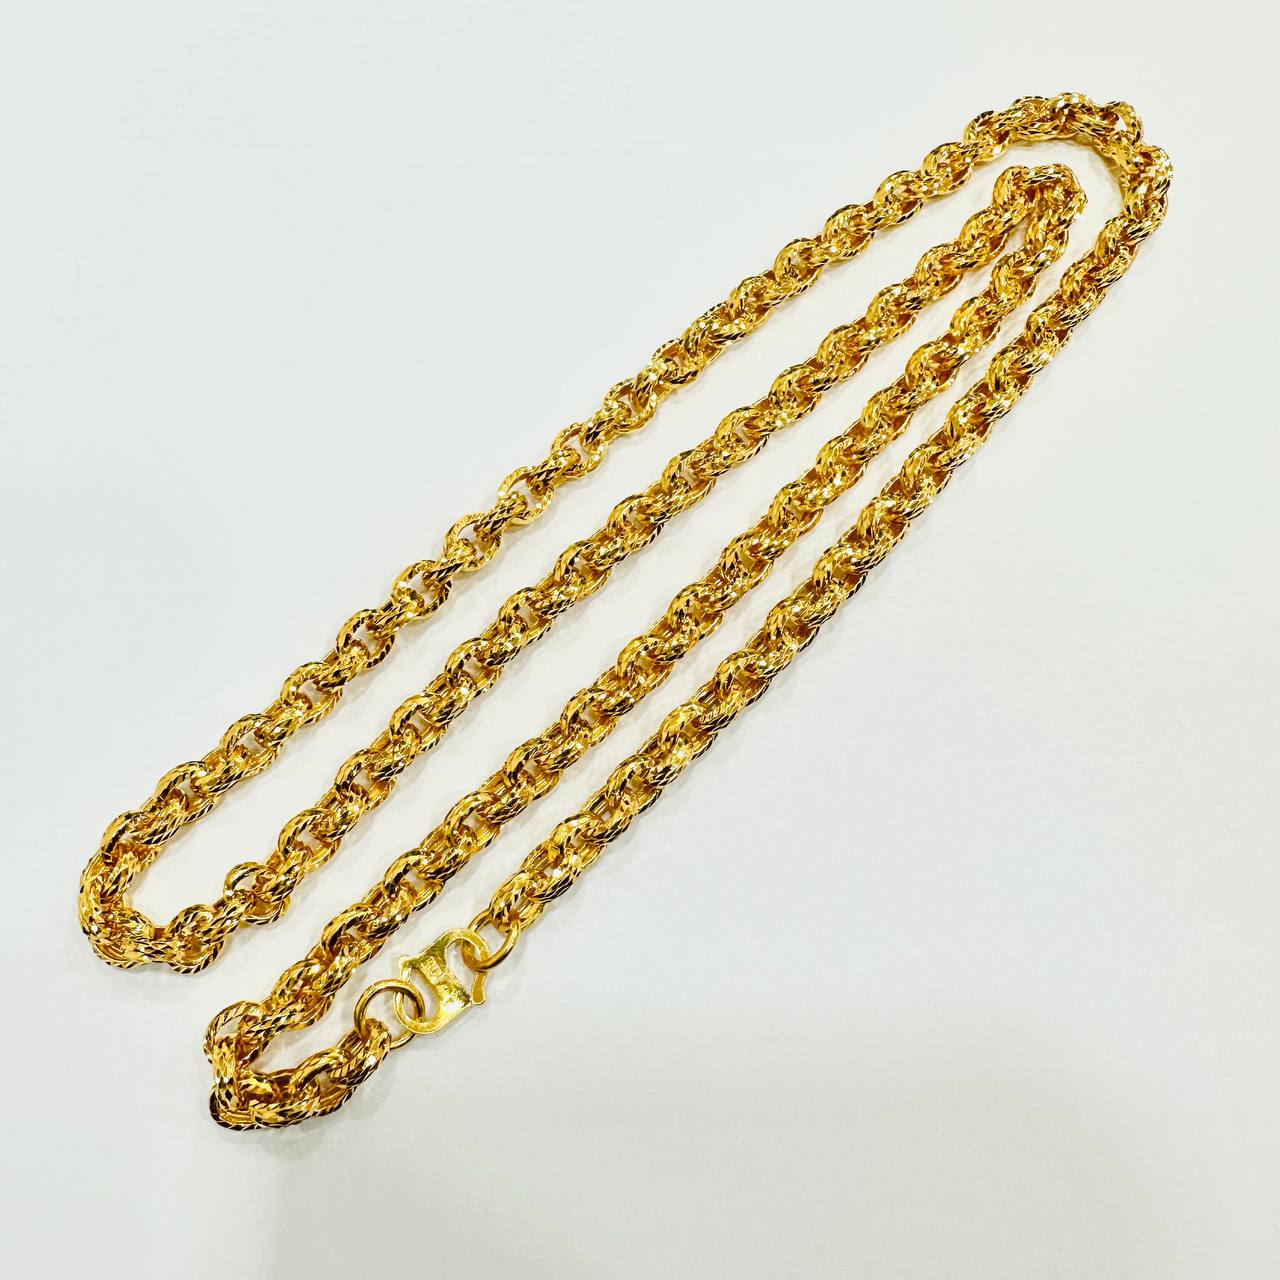 22k / 916 Gold Anchor Cutting Chain V4-916 gold-Best Gold Shop